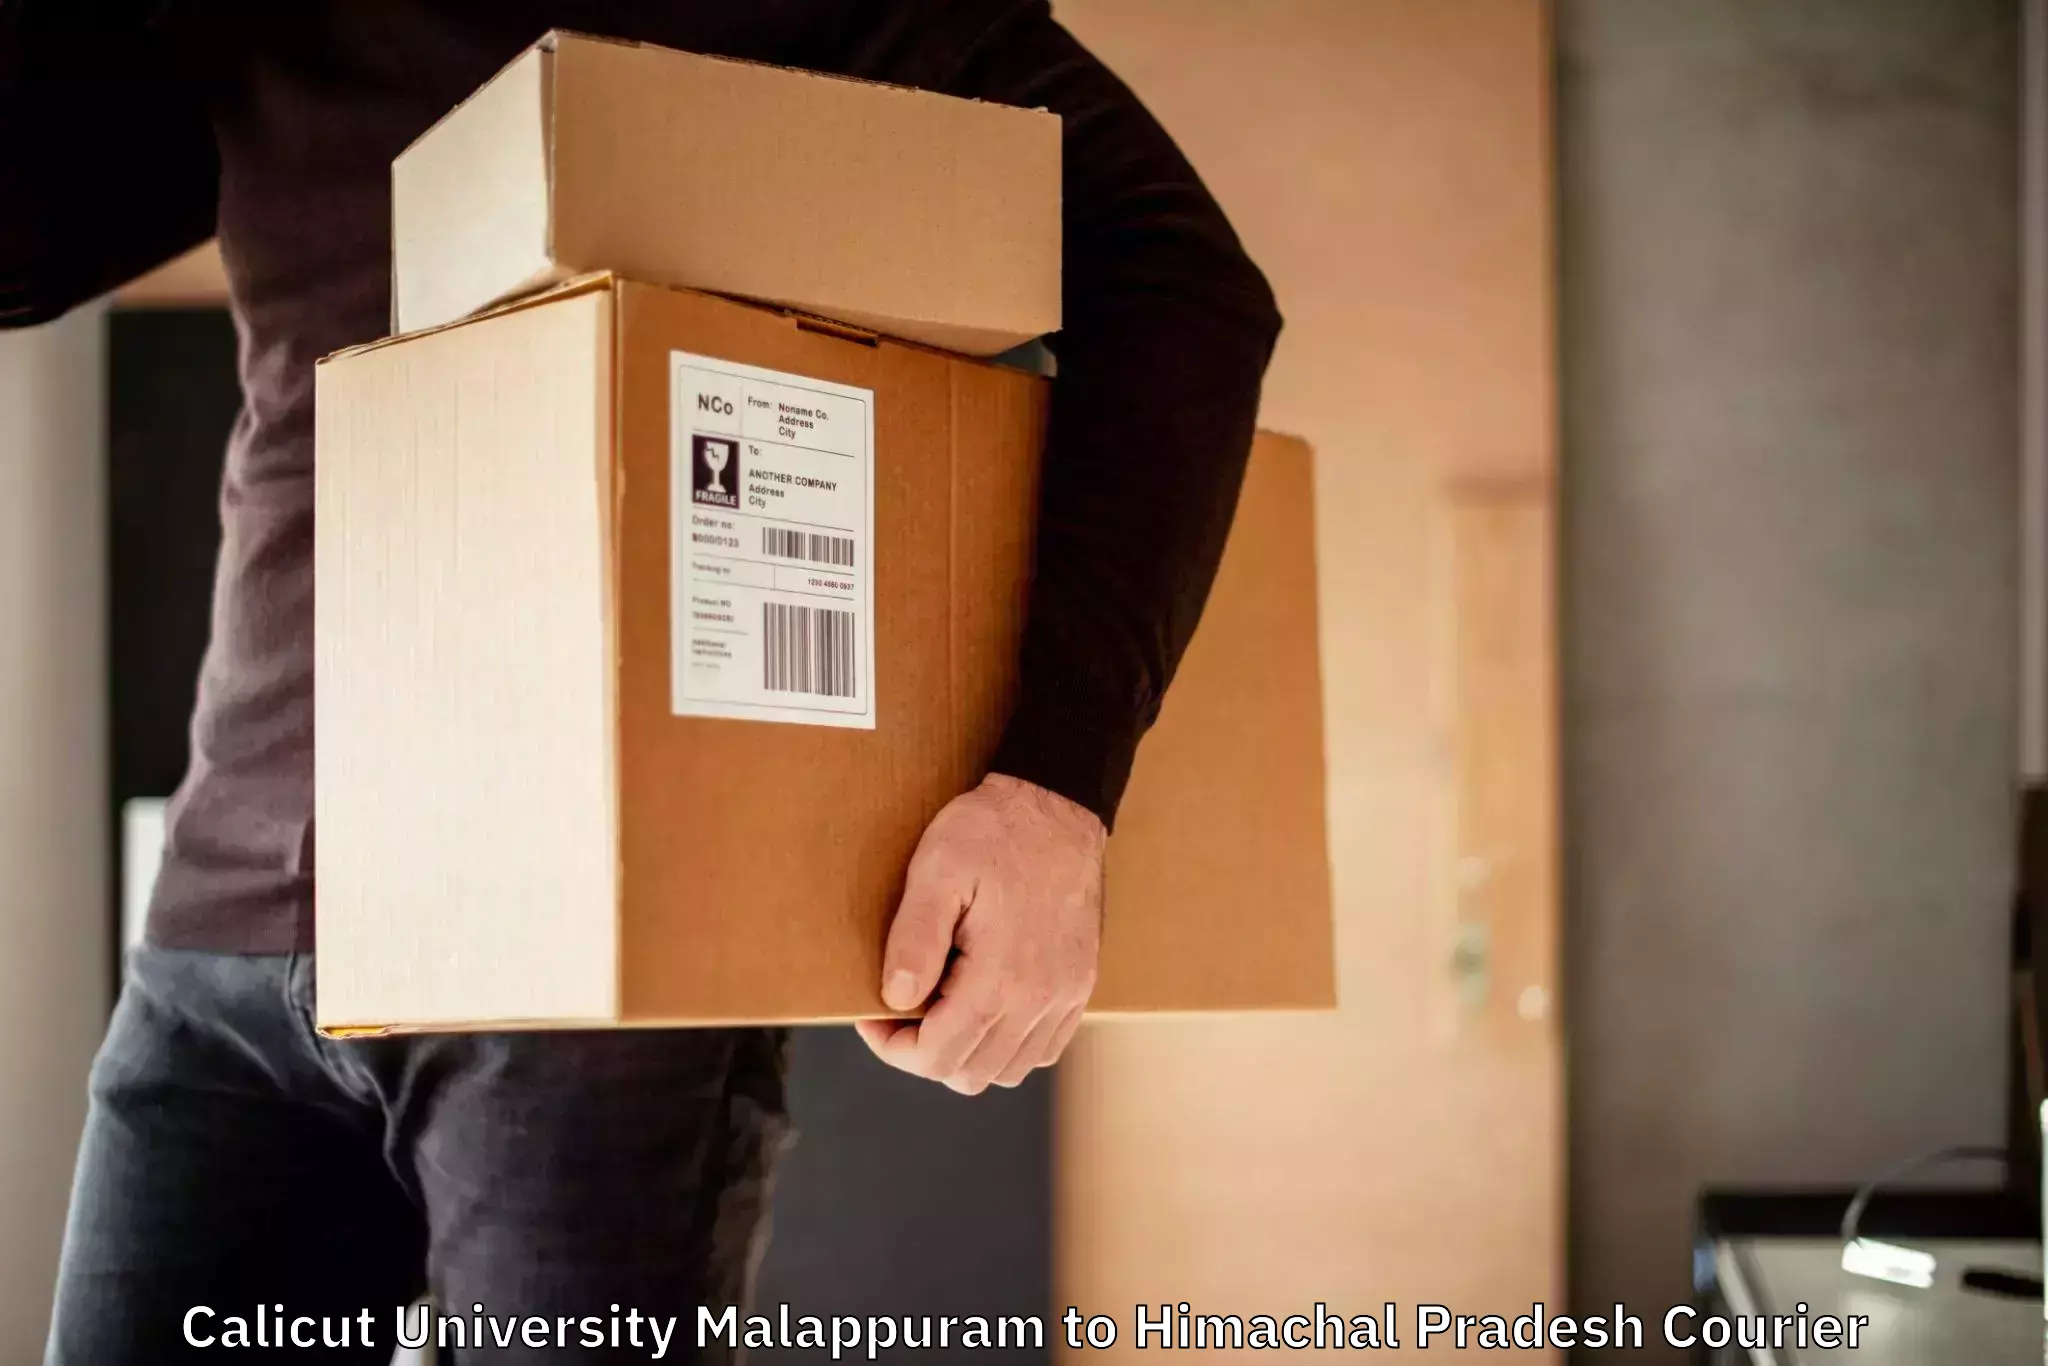 On-call courier service Calicut University Malappuram to Indora